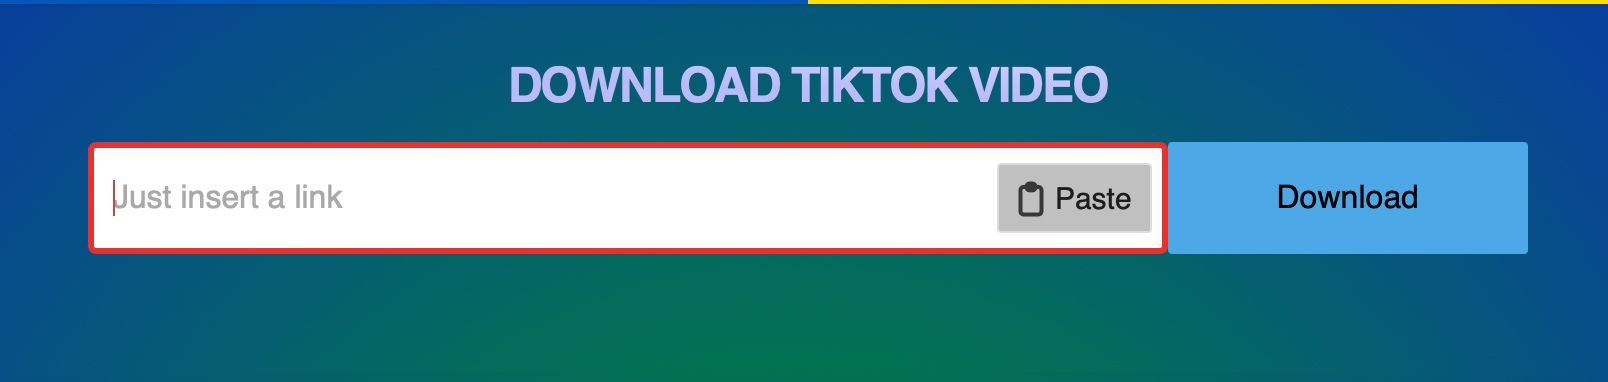 Download any TikTok video by inserting a link to the original TikTok video